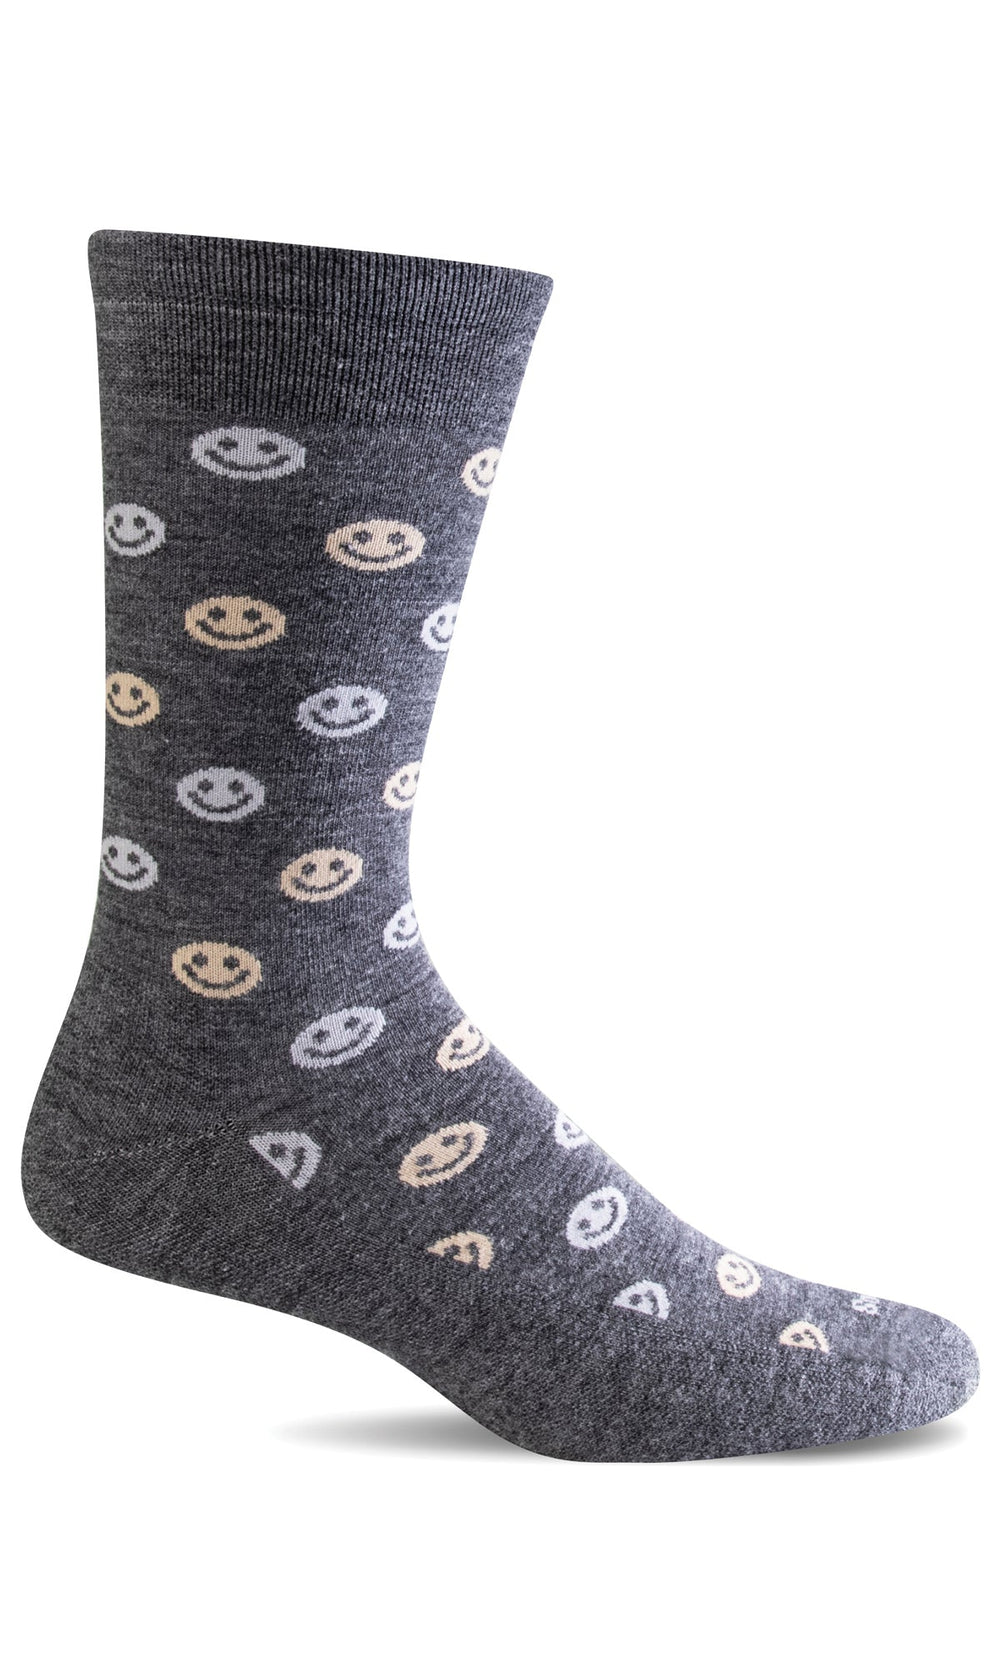 Sockwell Happy | Essential Comfort Socks (Men's) - Charcoal